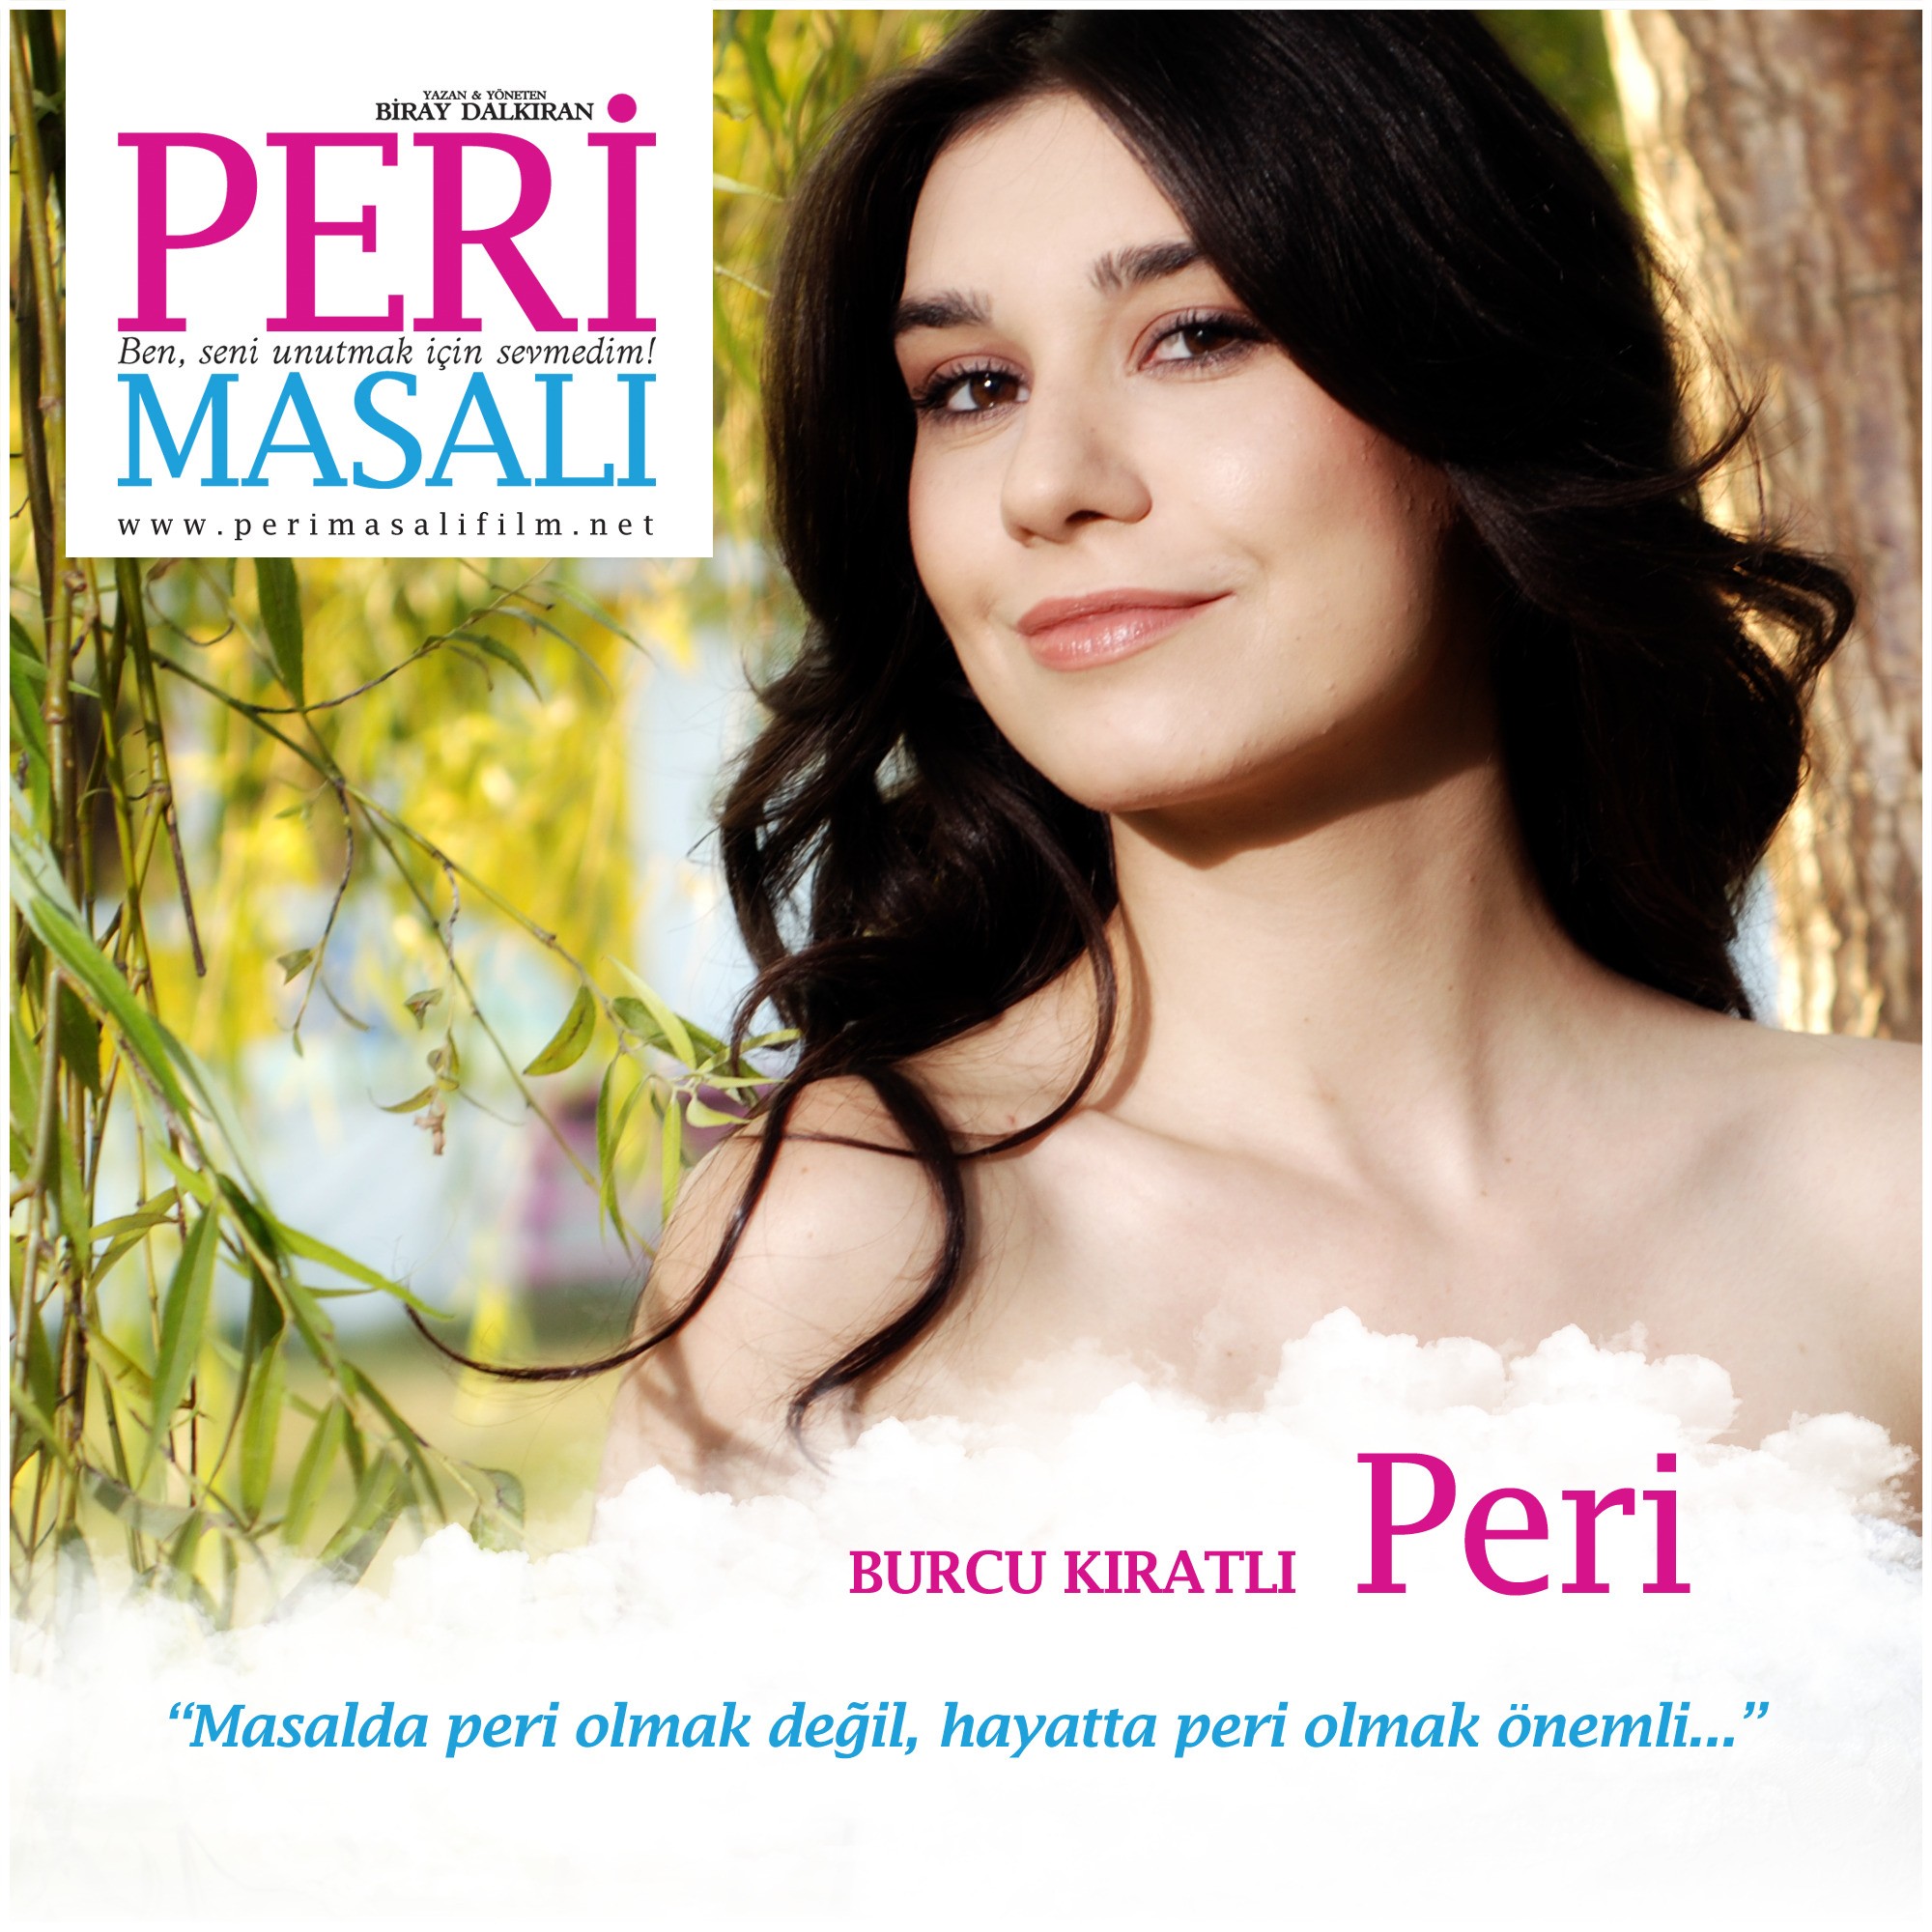 Mega Sized Movie Poster Image for Peri Masali (#7 of 9)